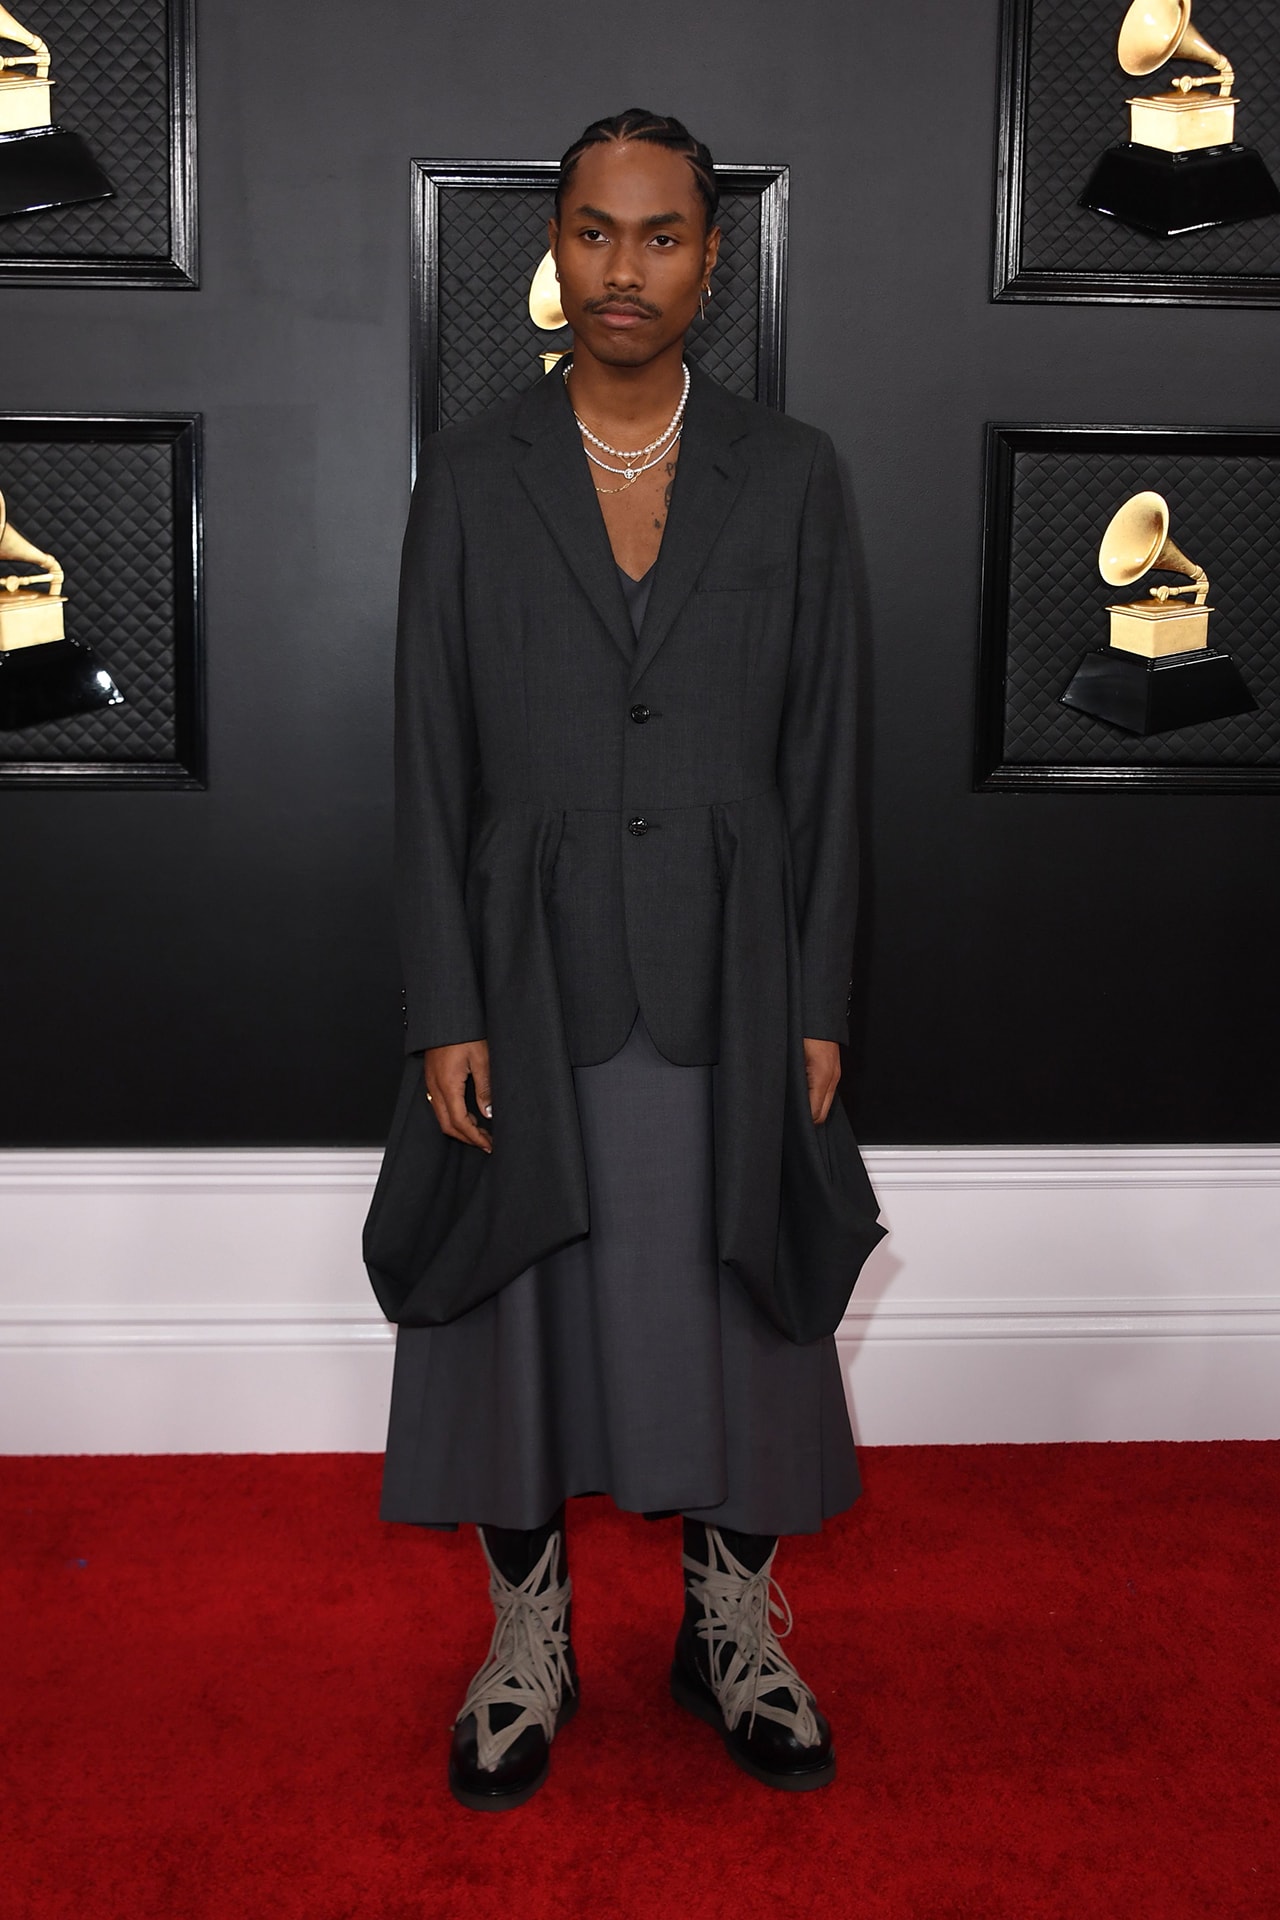 Steve Lacy 62nd Grammy Awards 2020 Red Carpet Comme Des Garcons Suit The Internet